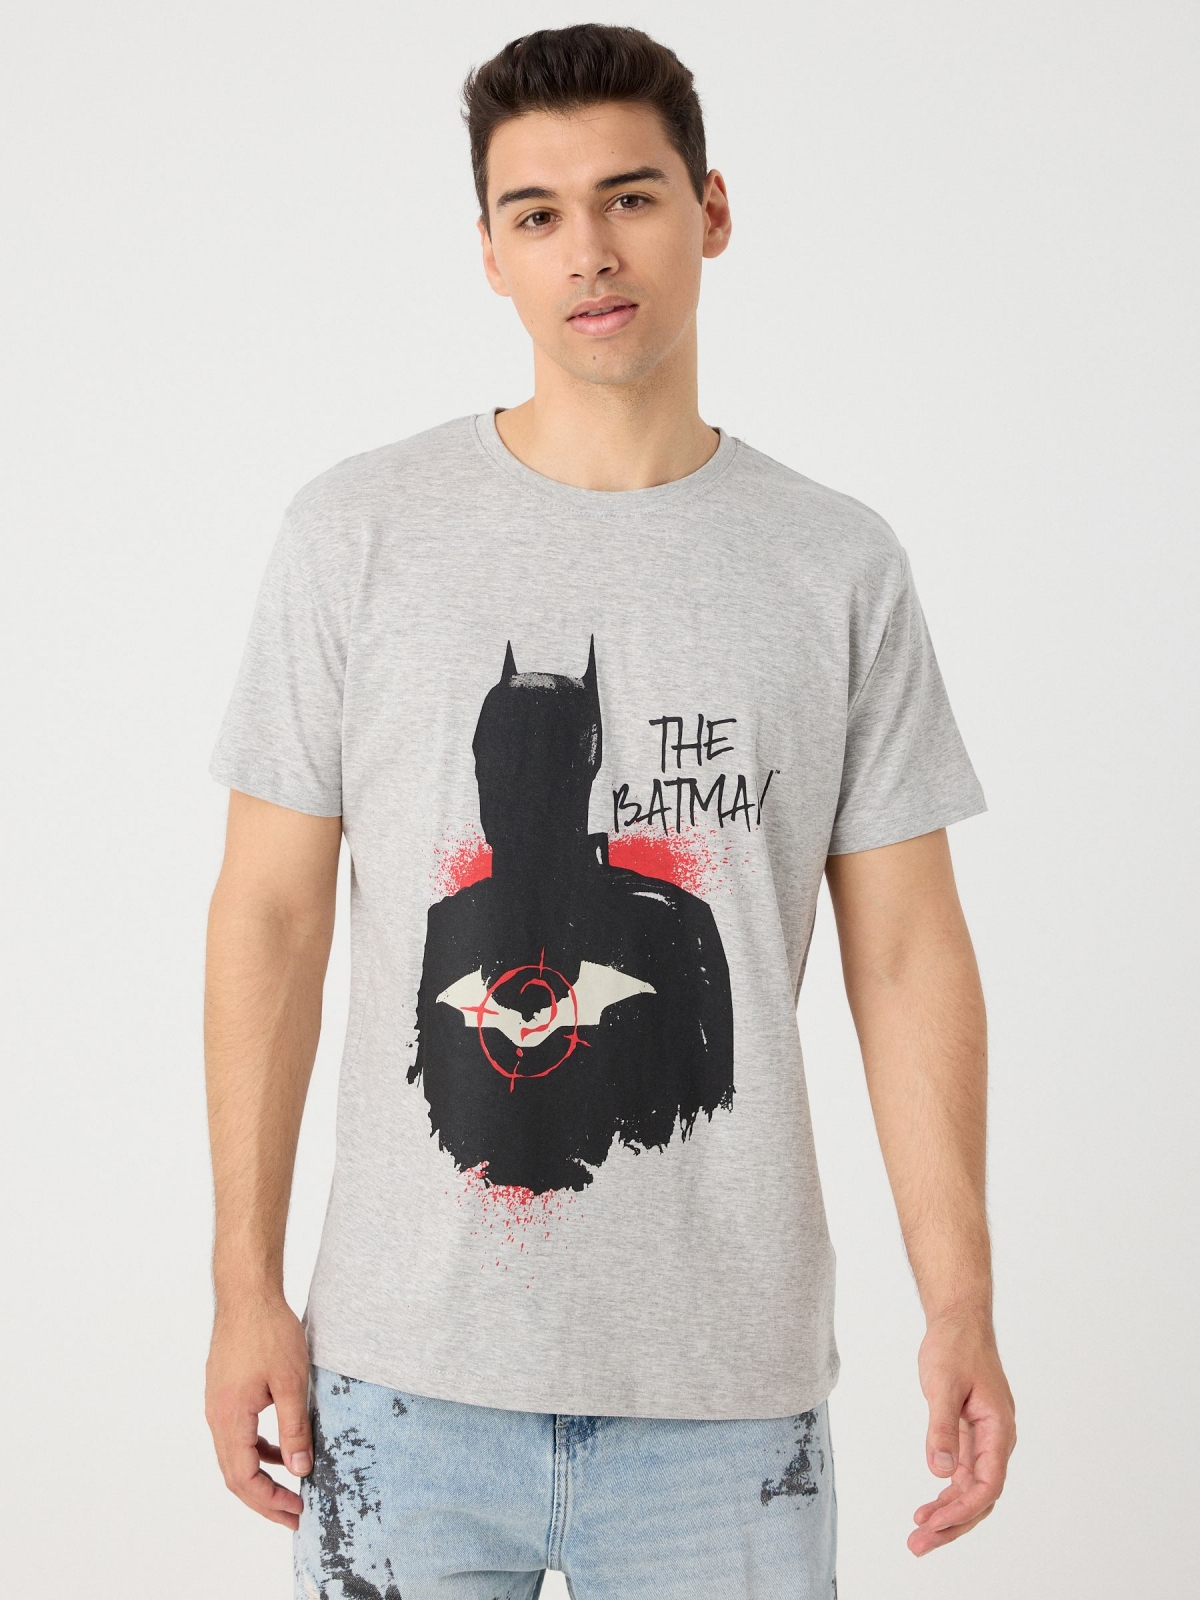 Camiseta The Batman gris vista media frontal